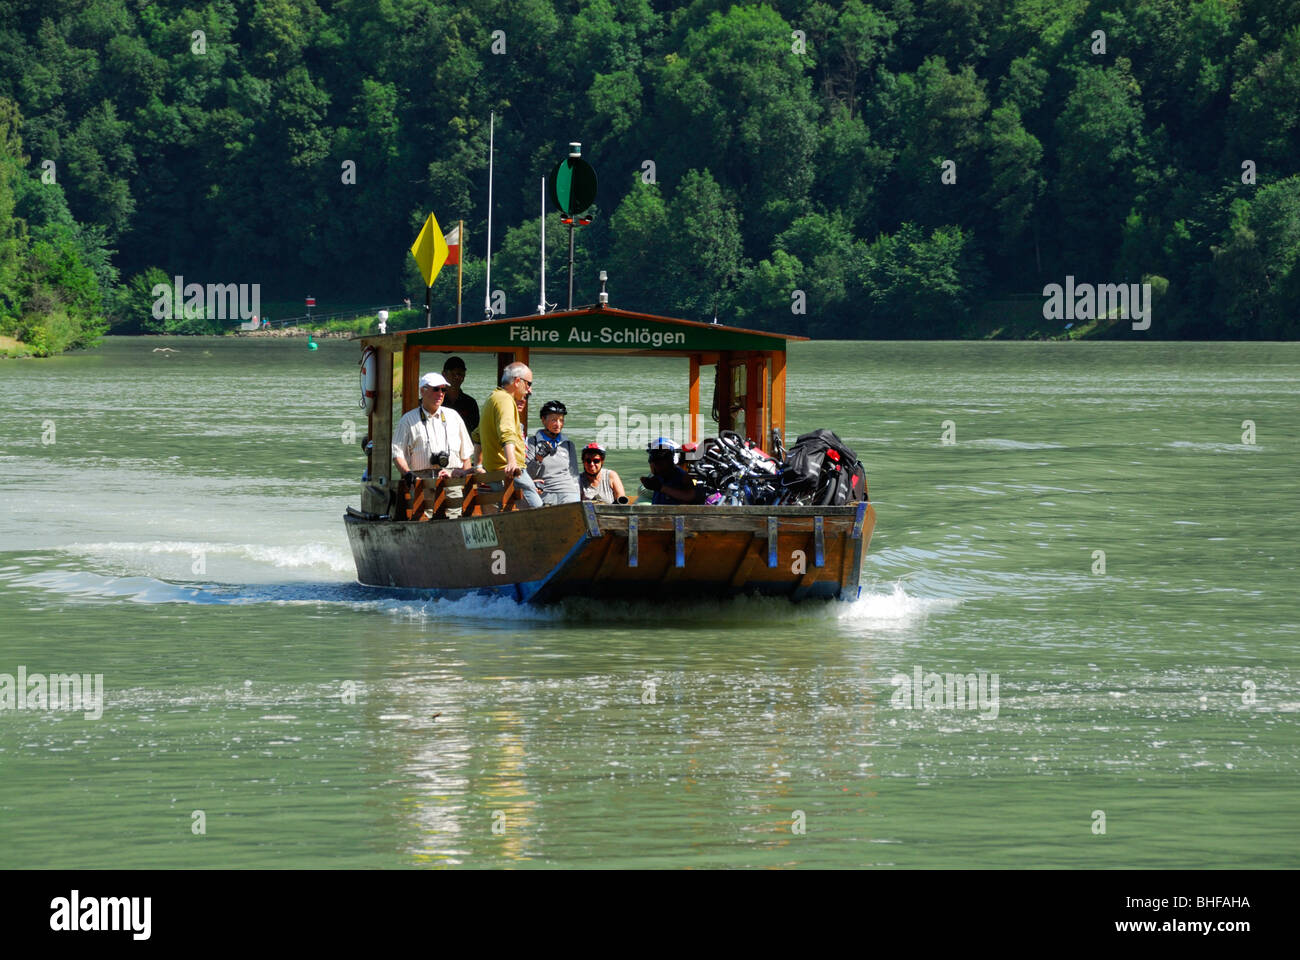 Bicycle ferry on Danube river, Schloegen, Haibach ob der Donau, Upper Austria, Austria Stock Photo